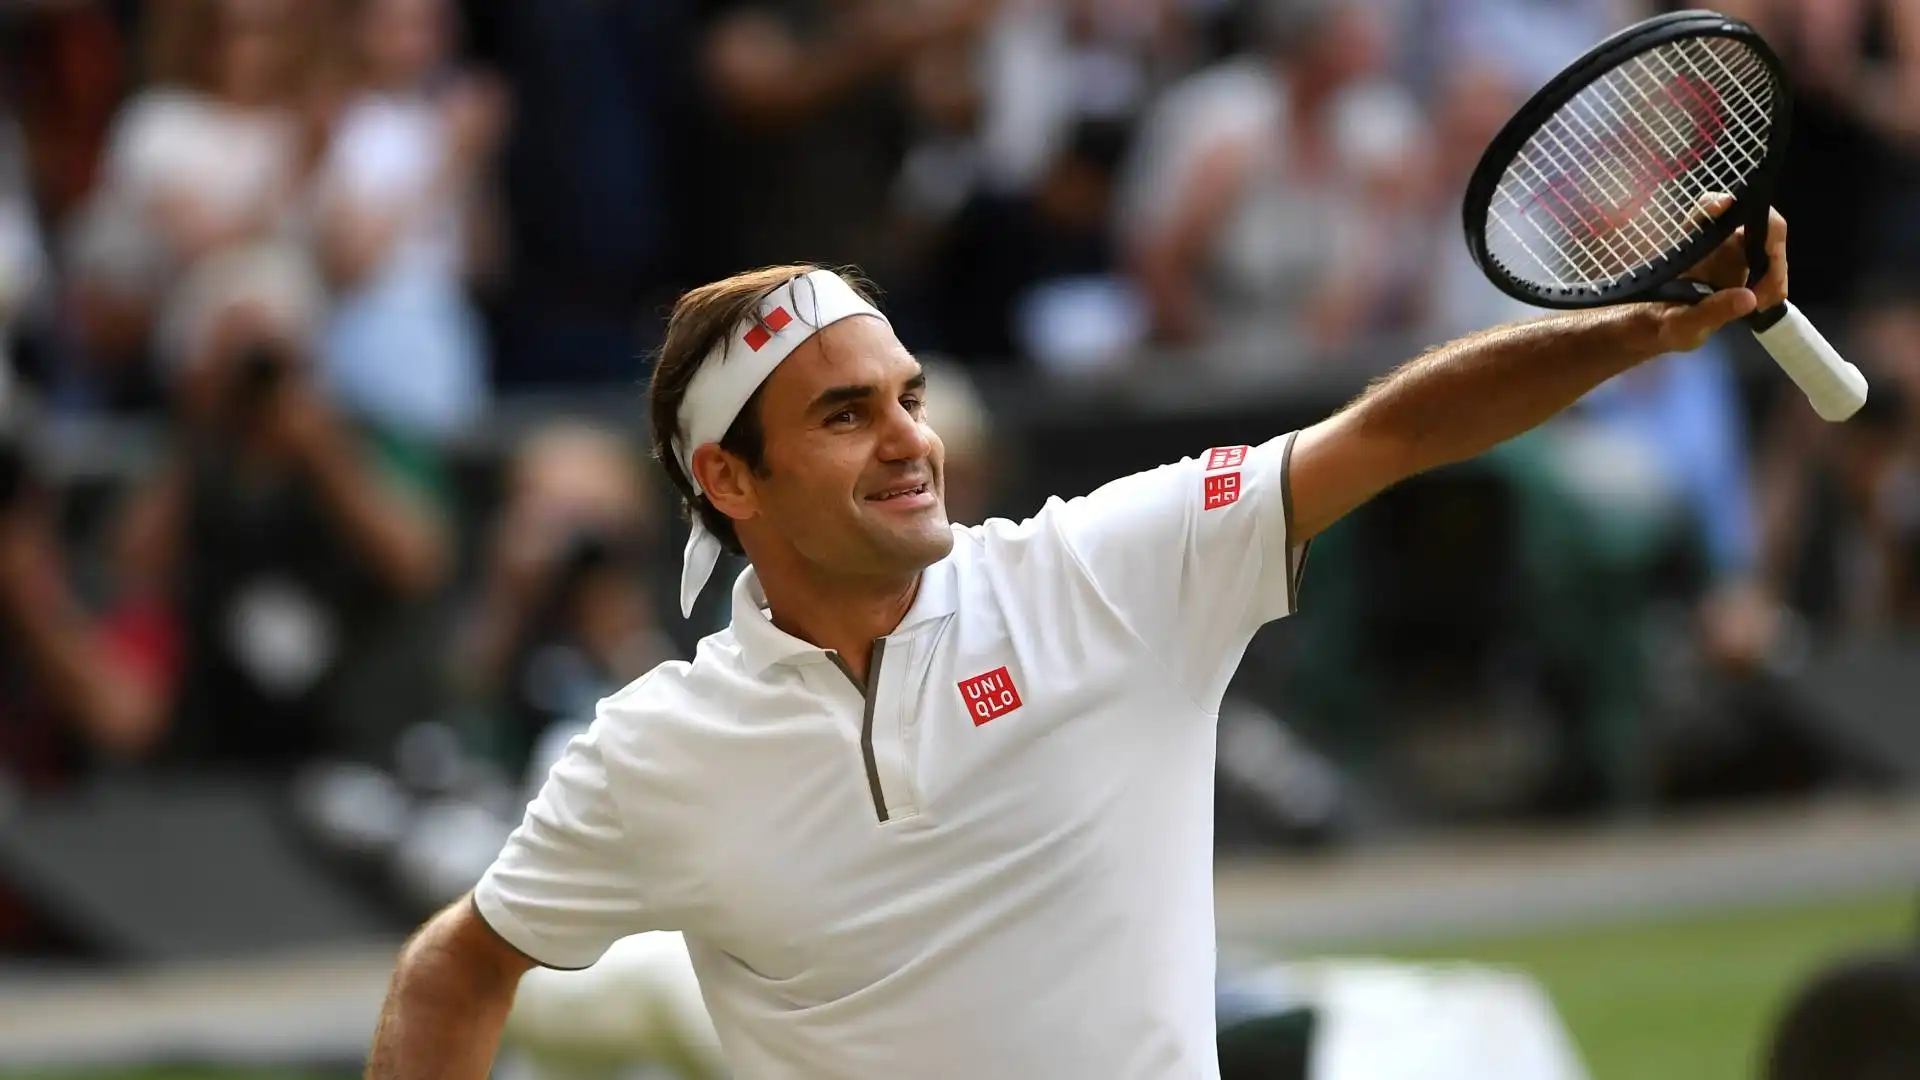 Tanti auguri a Roger Federer!